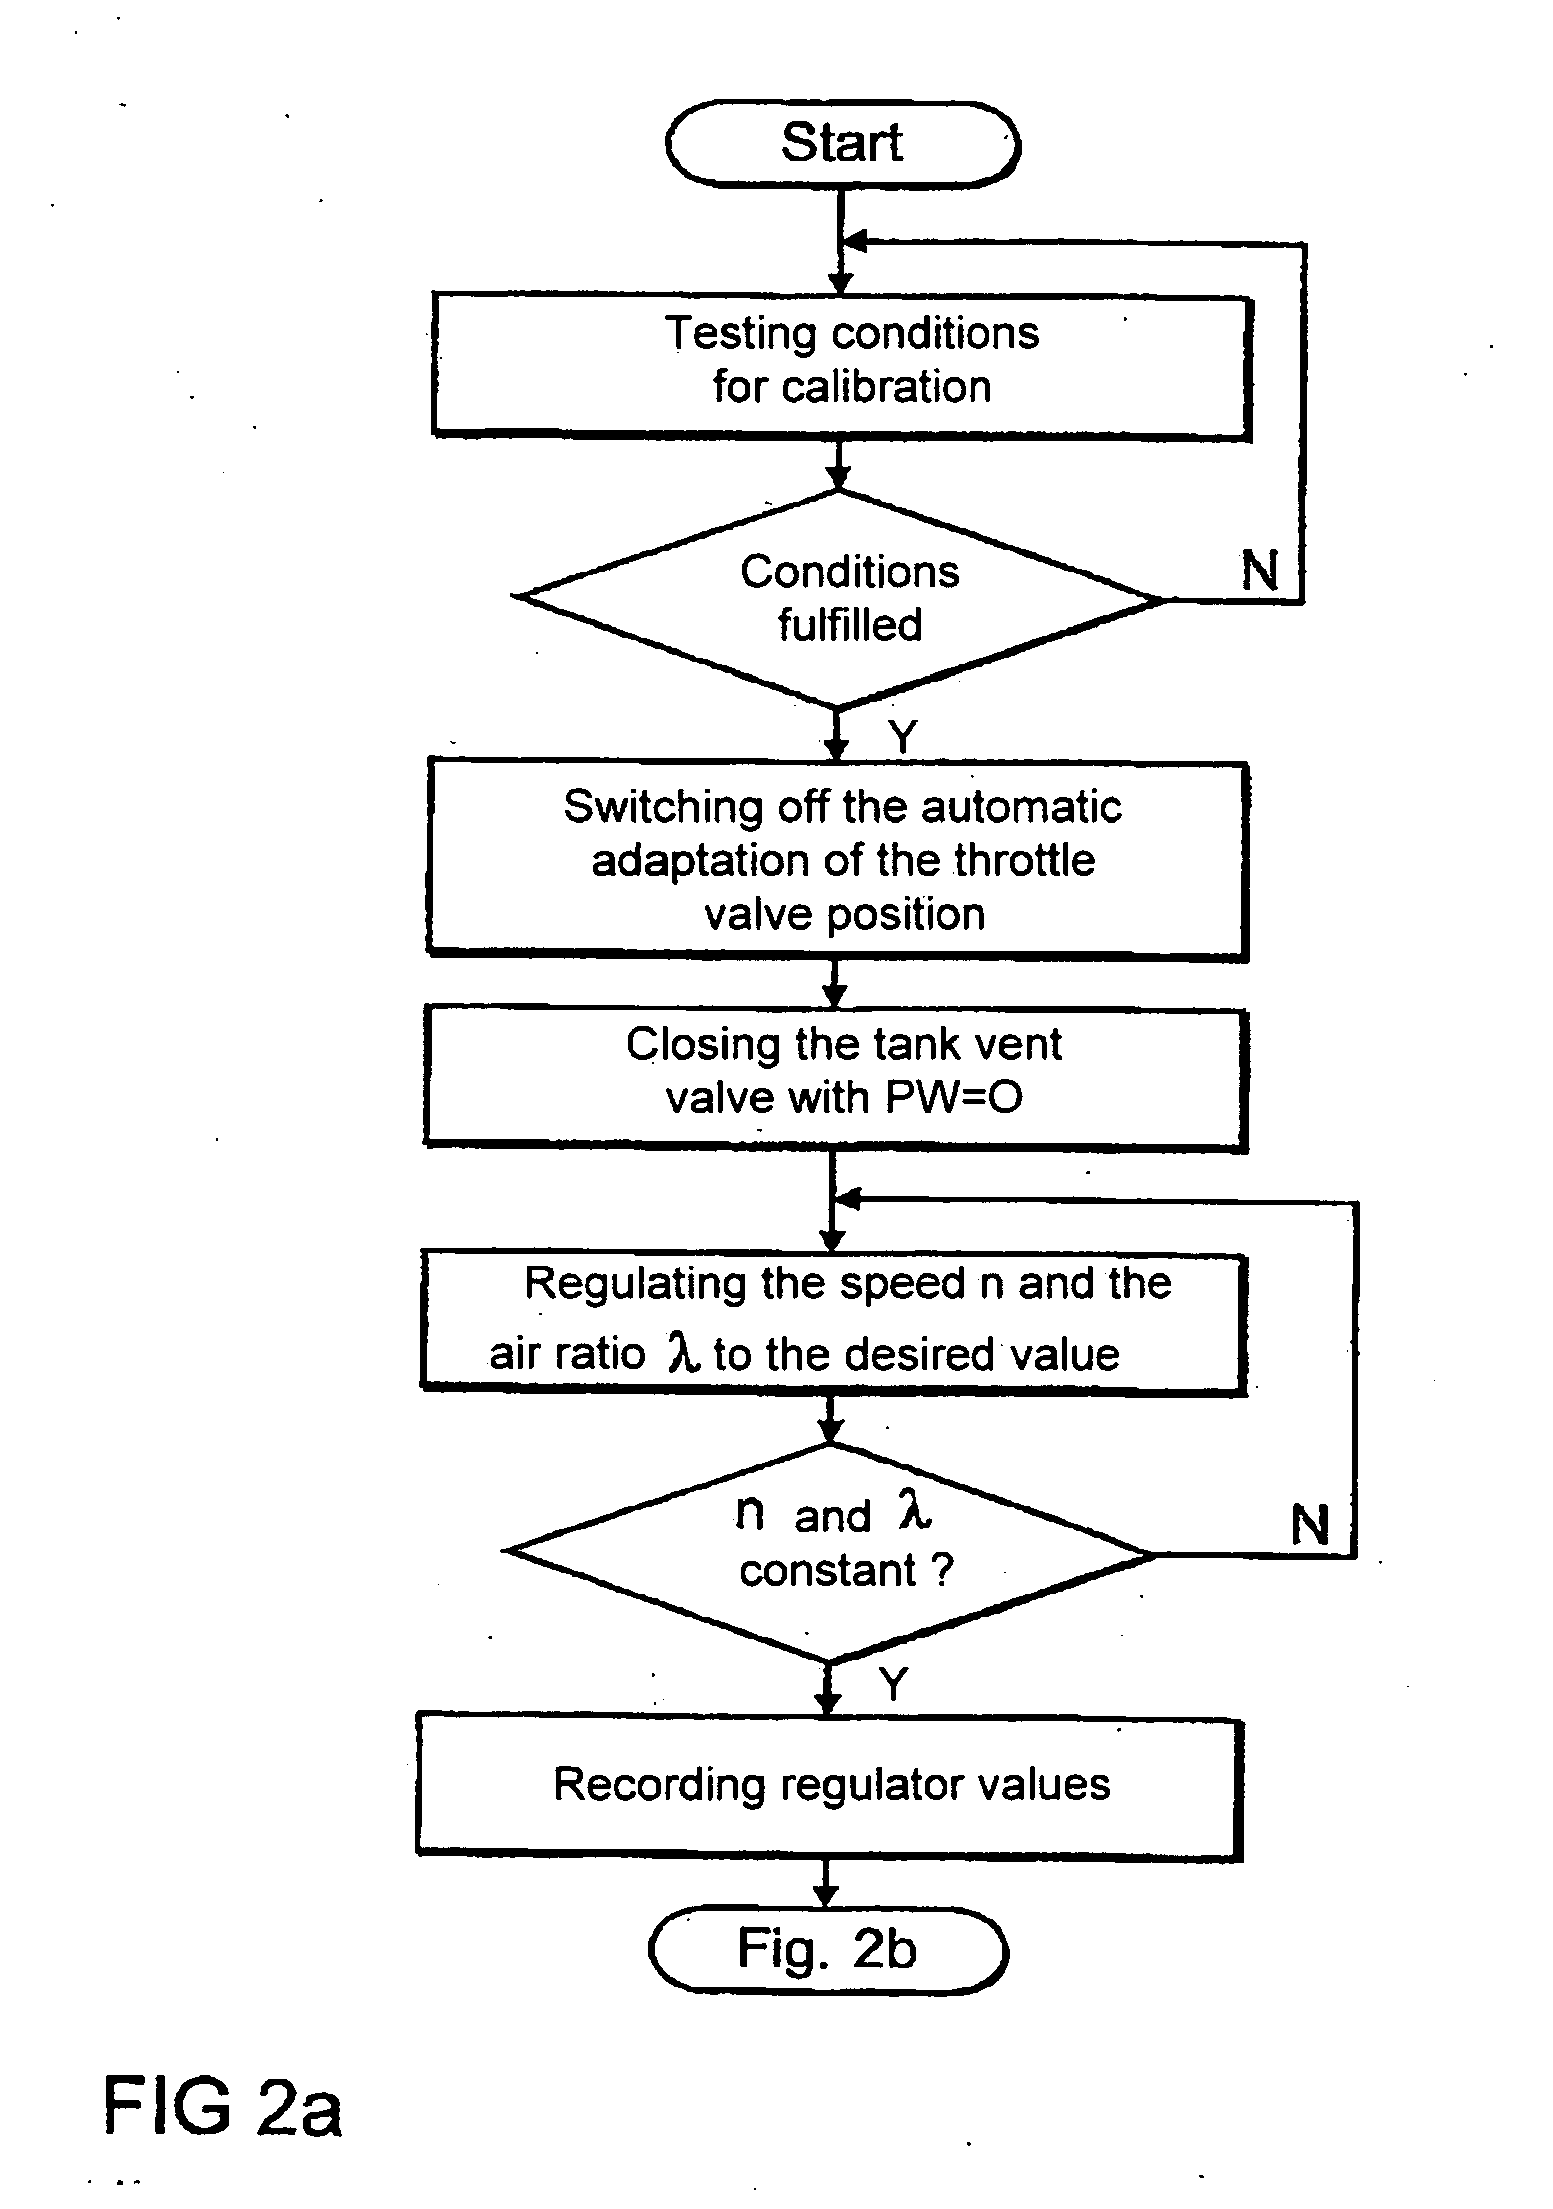 Method for controlling a regeneration valve of a fuel vapor retention system